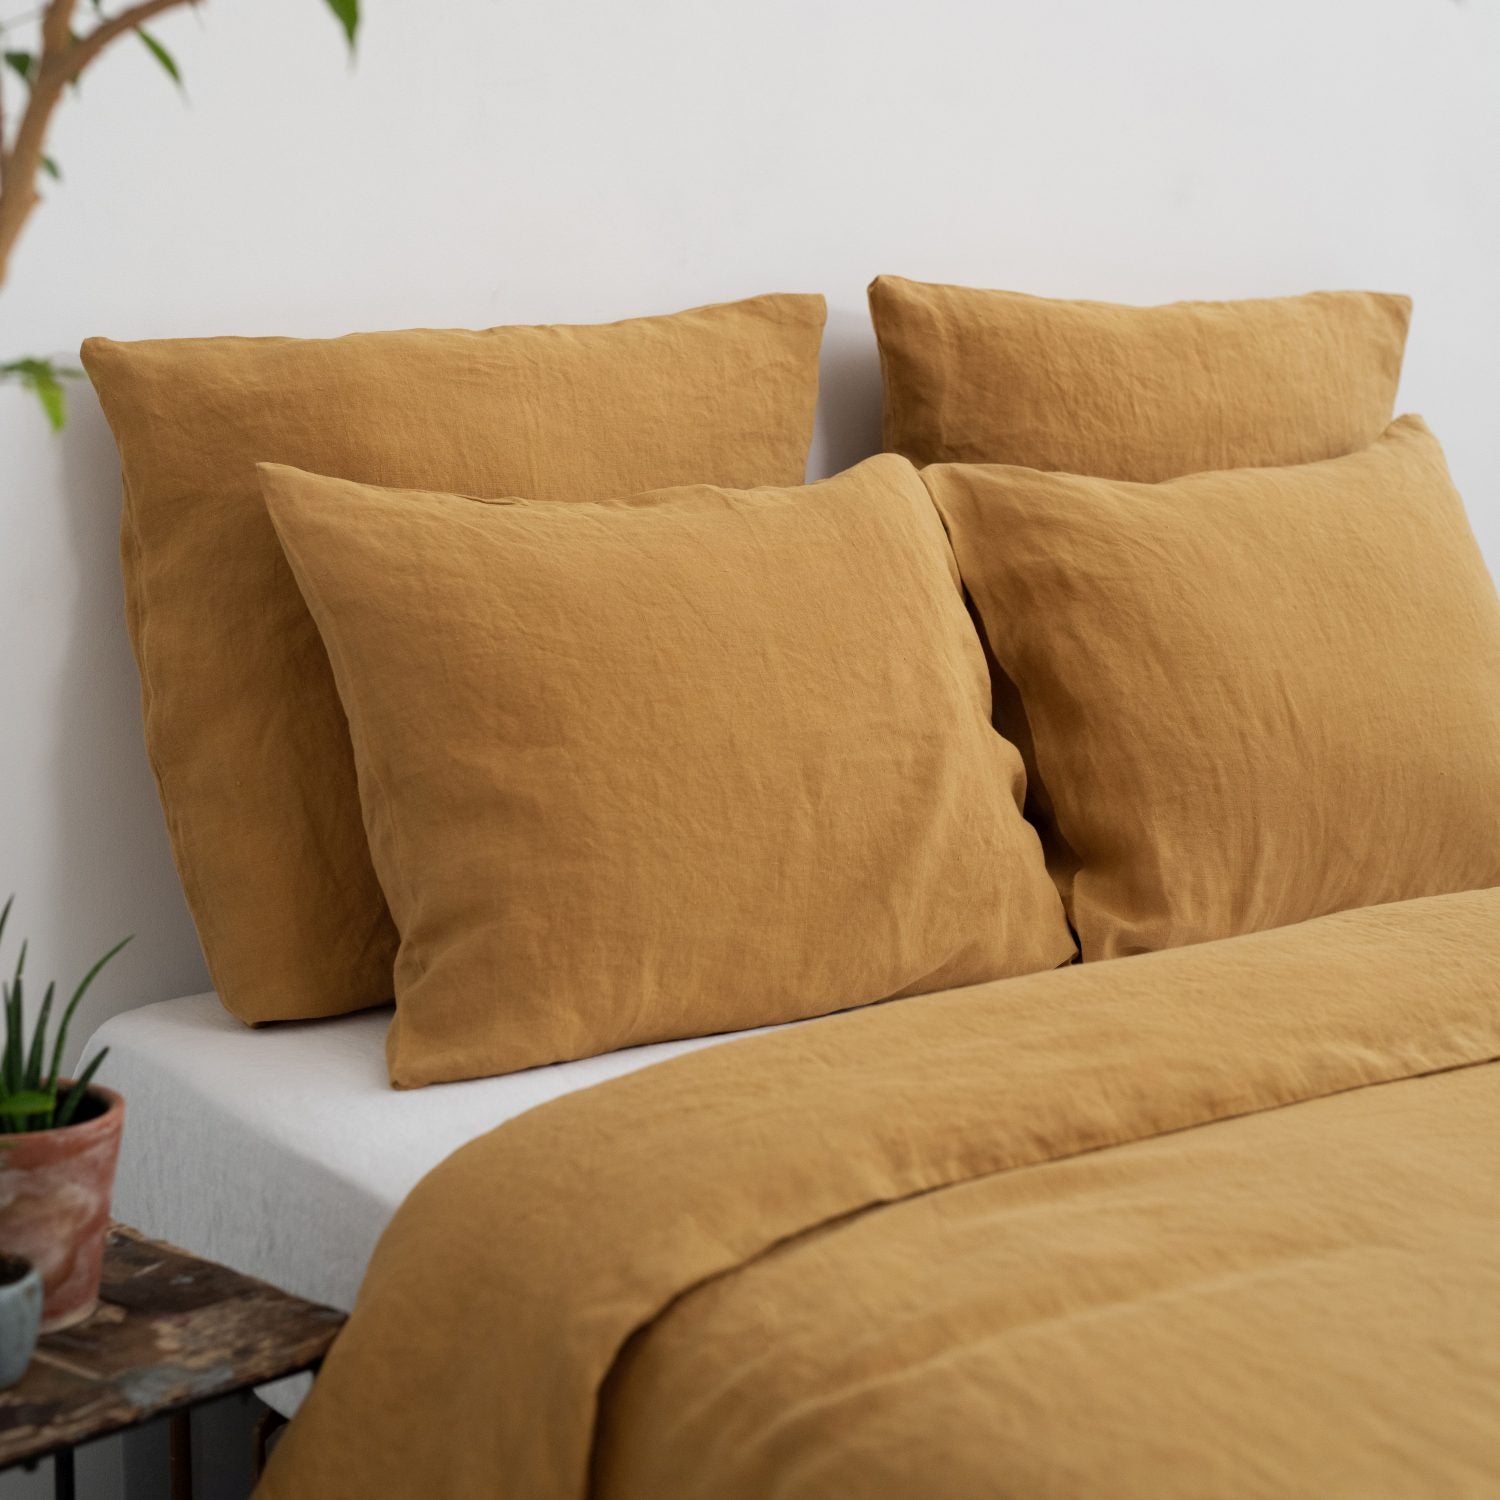 Tabernas Oasis Hemp Pillowcase - Breathable Hypoallergenic Bed Linen